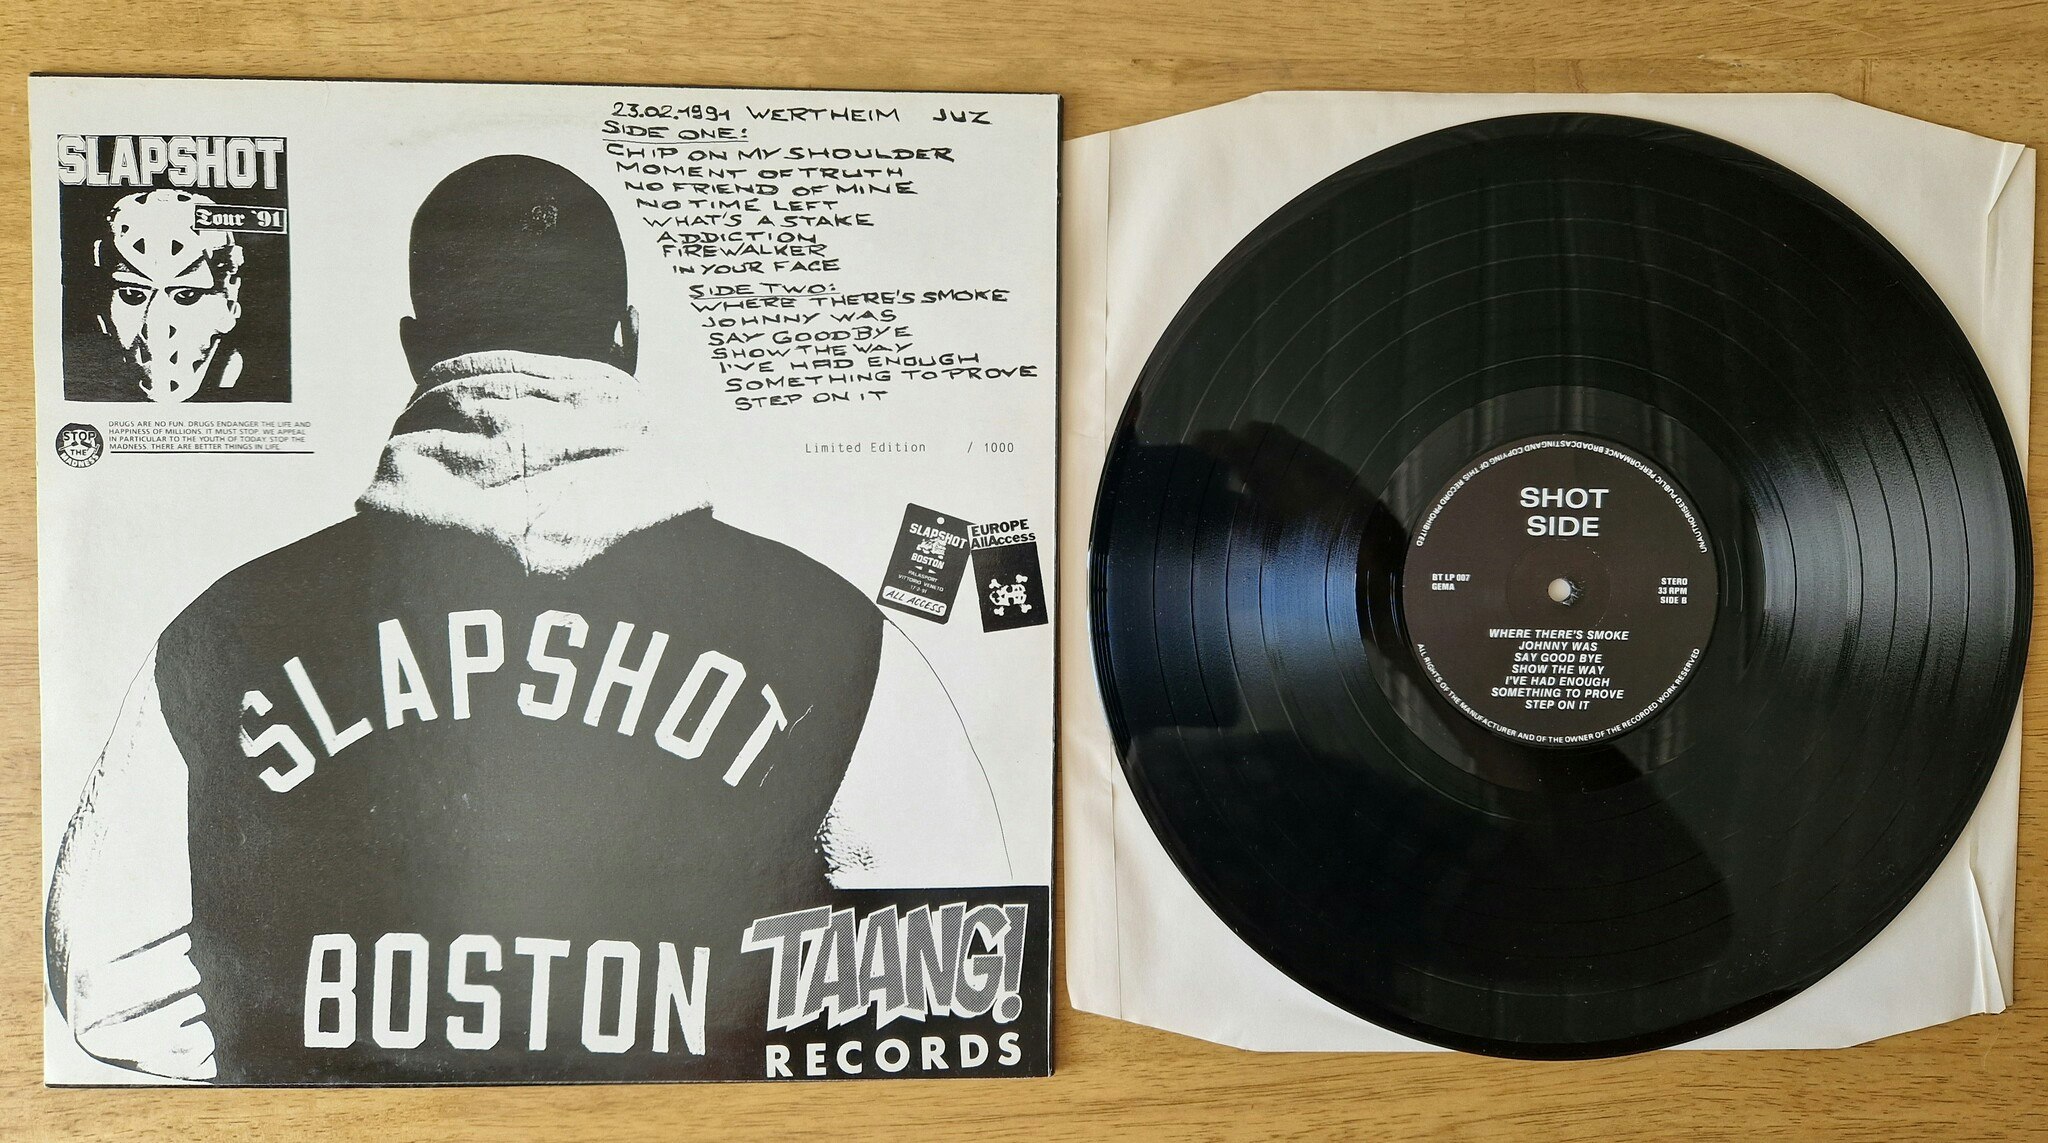 Slapshot, Tour 91. Vinyl LP